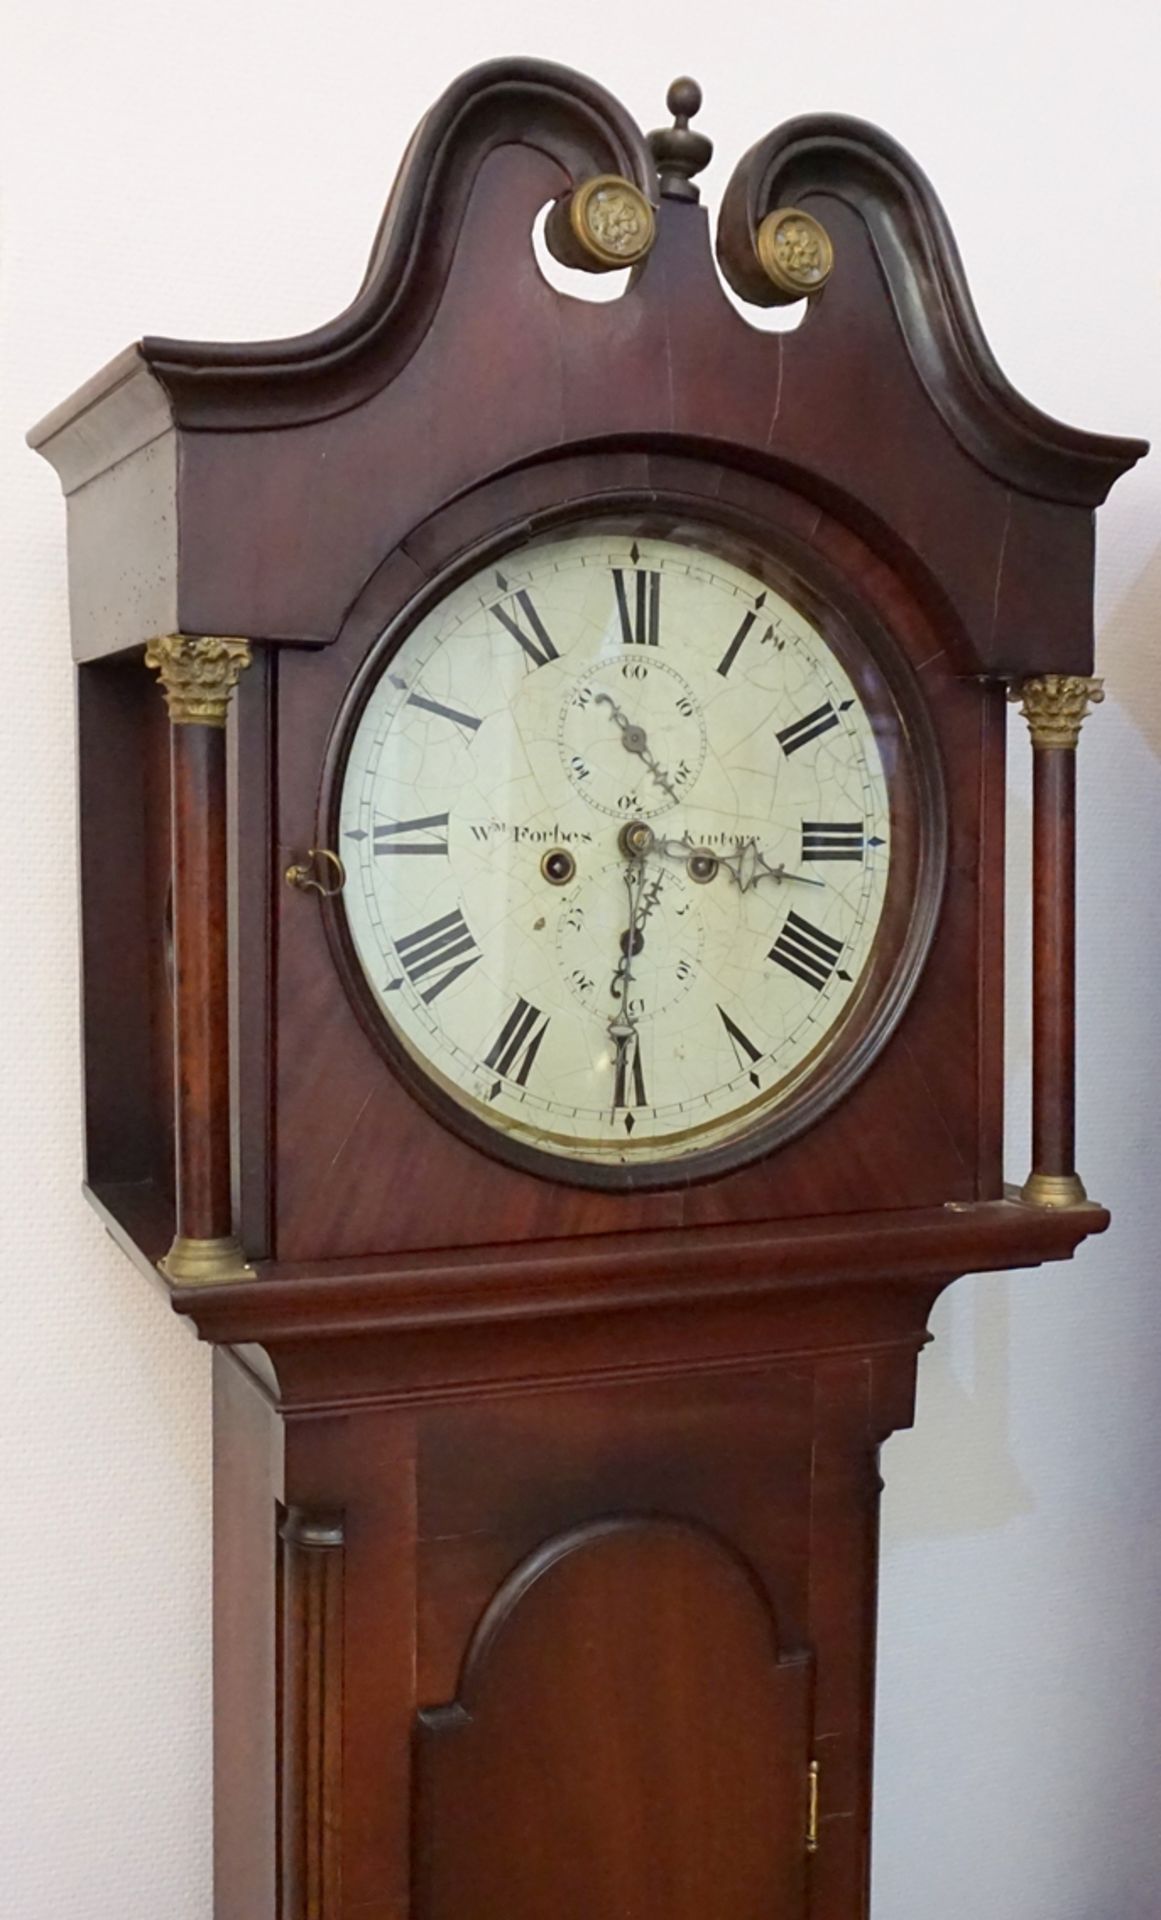 Longcase clock, William Forbes, Kintore, Scotland, c. 1830/40 - Image 2 of 6